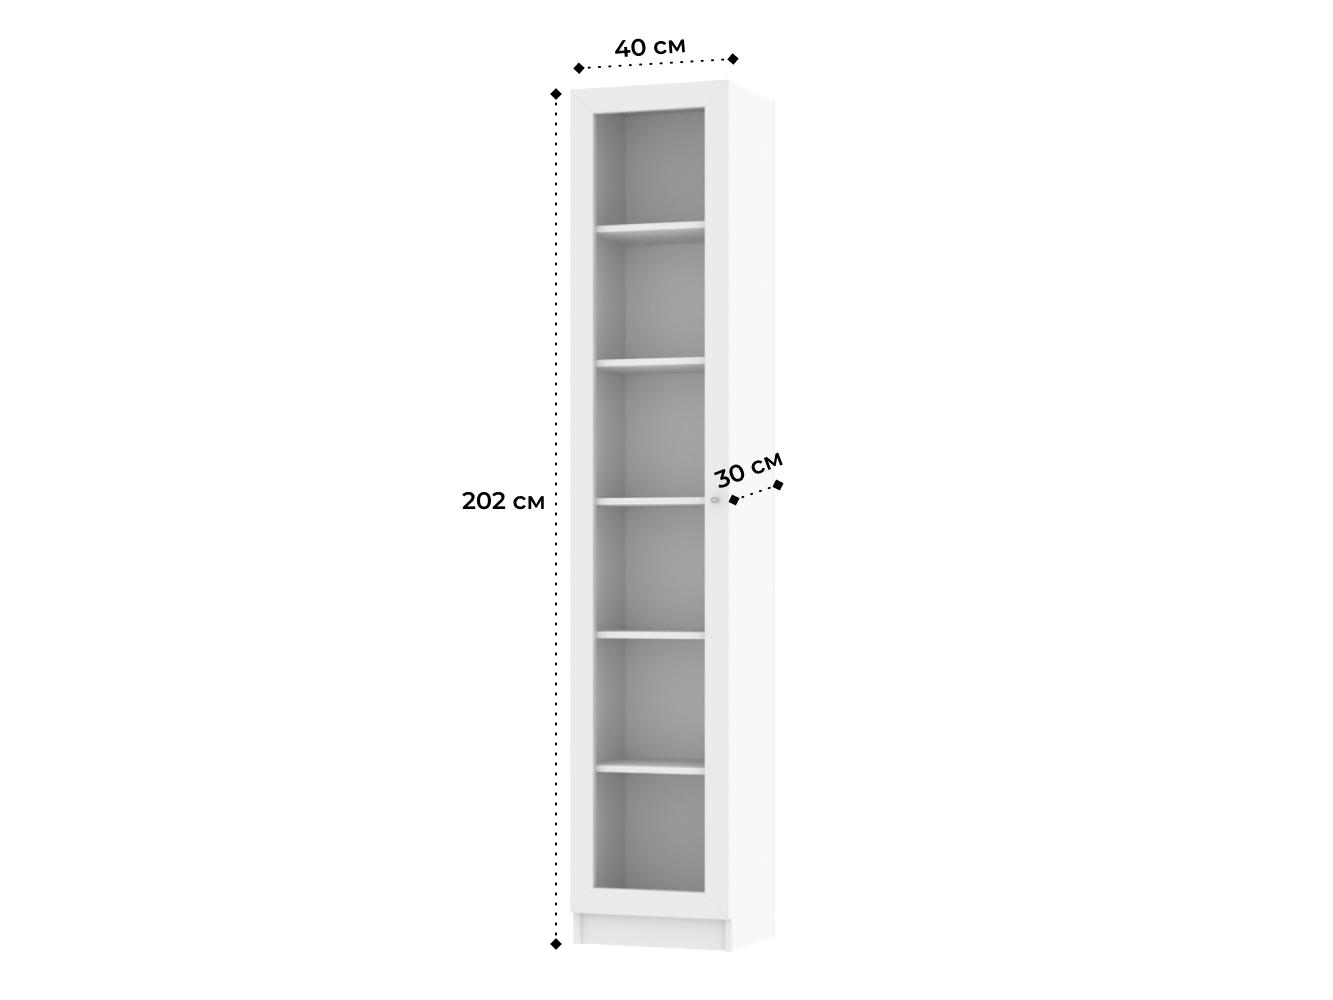  Книжный шкаф Билли 332 white desire ИКЕА (IKEA) изображение товара